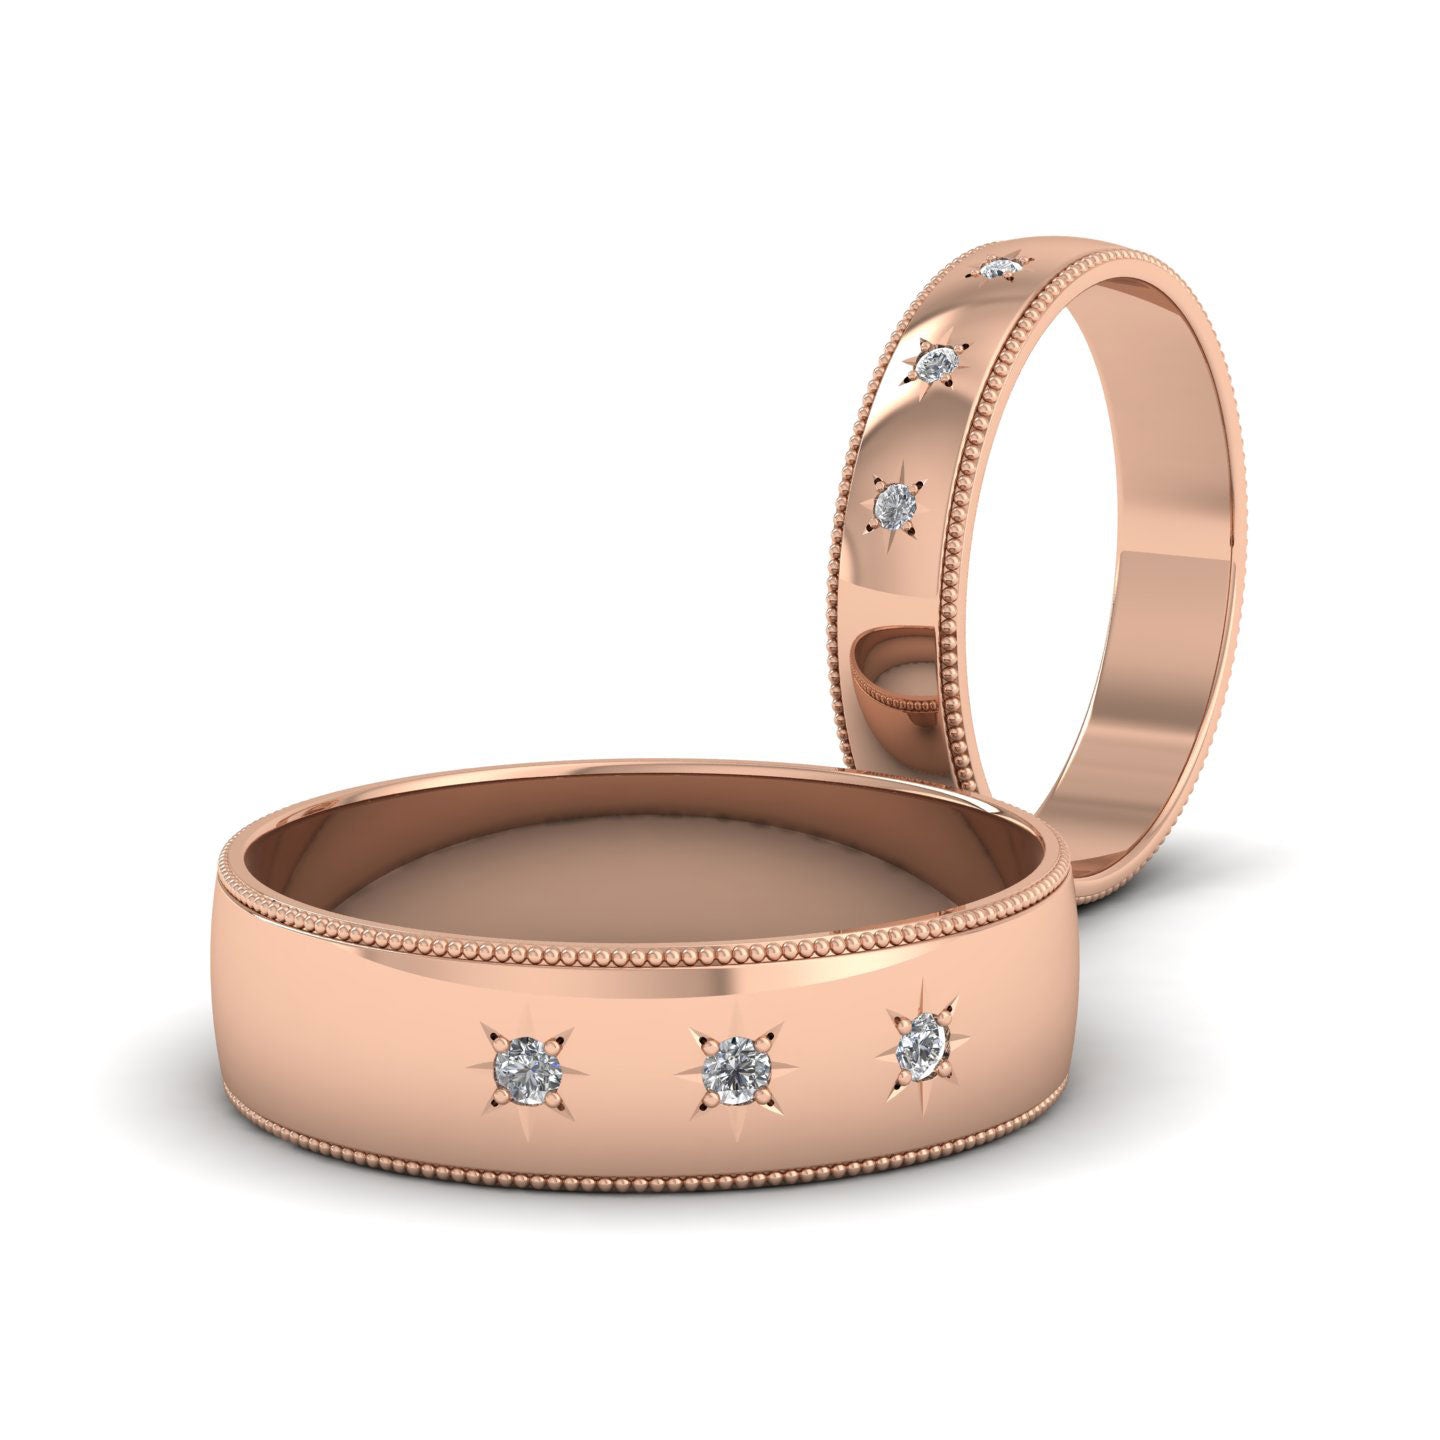 Millgrained Edge And Three Star Diamond Set 18ct Rose Gold 4mm Wedding Ring